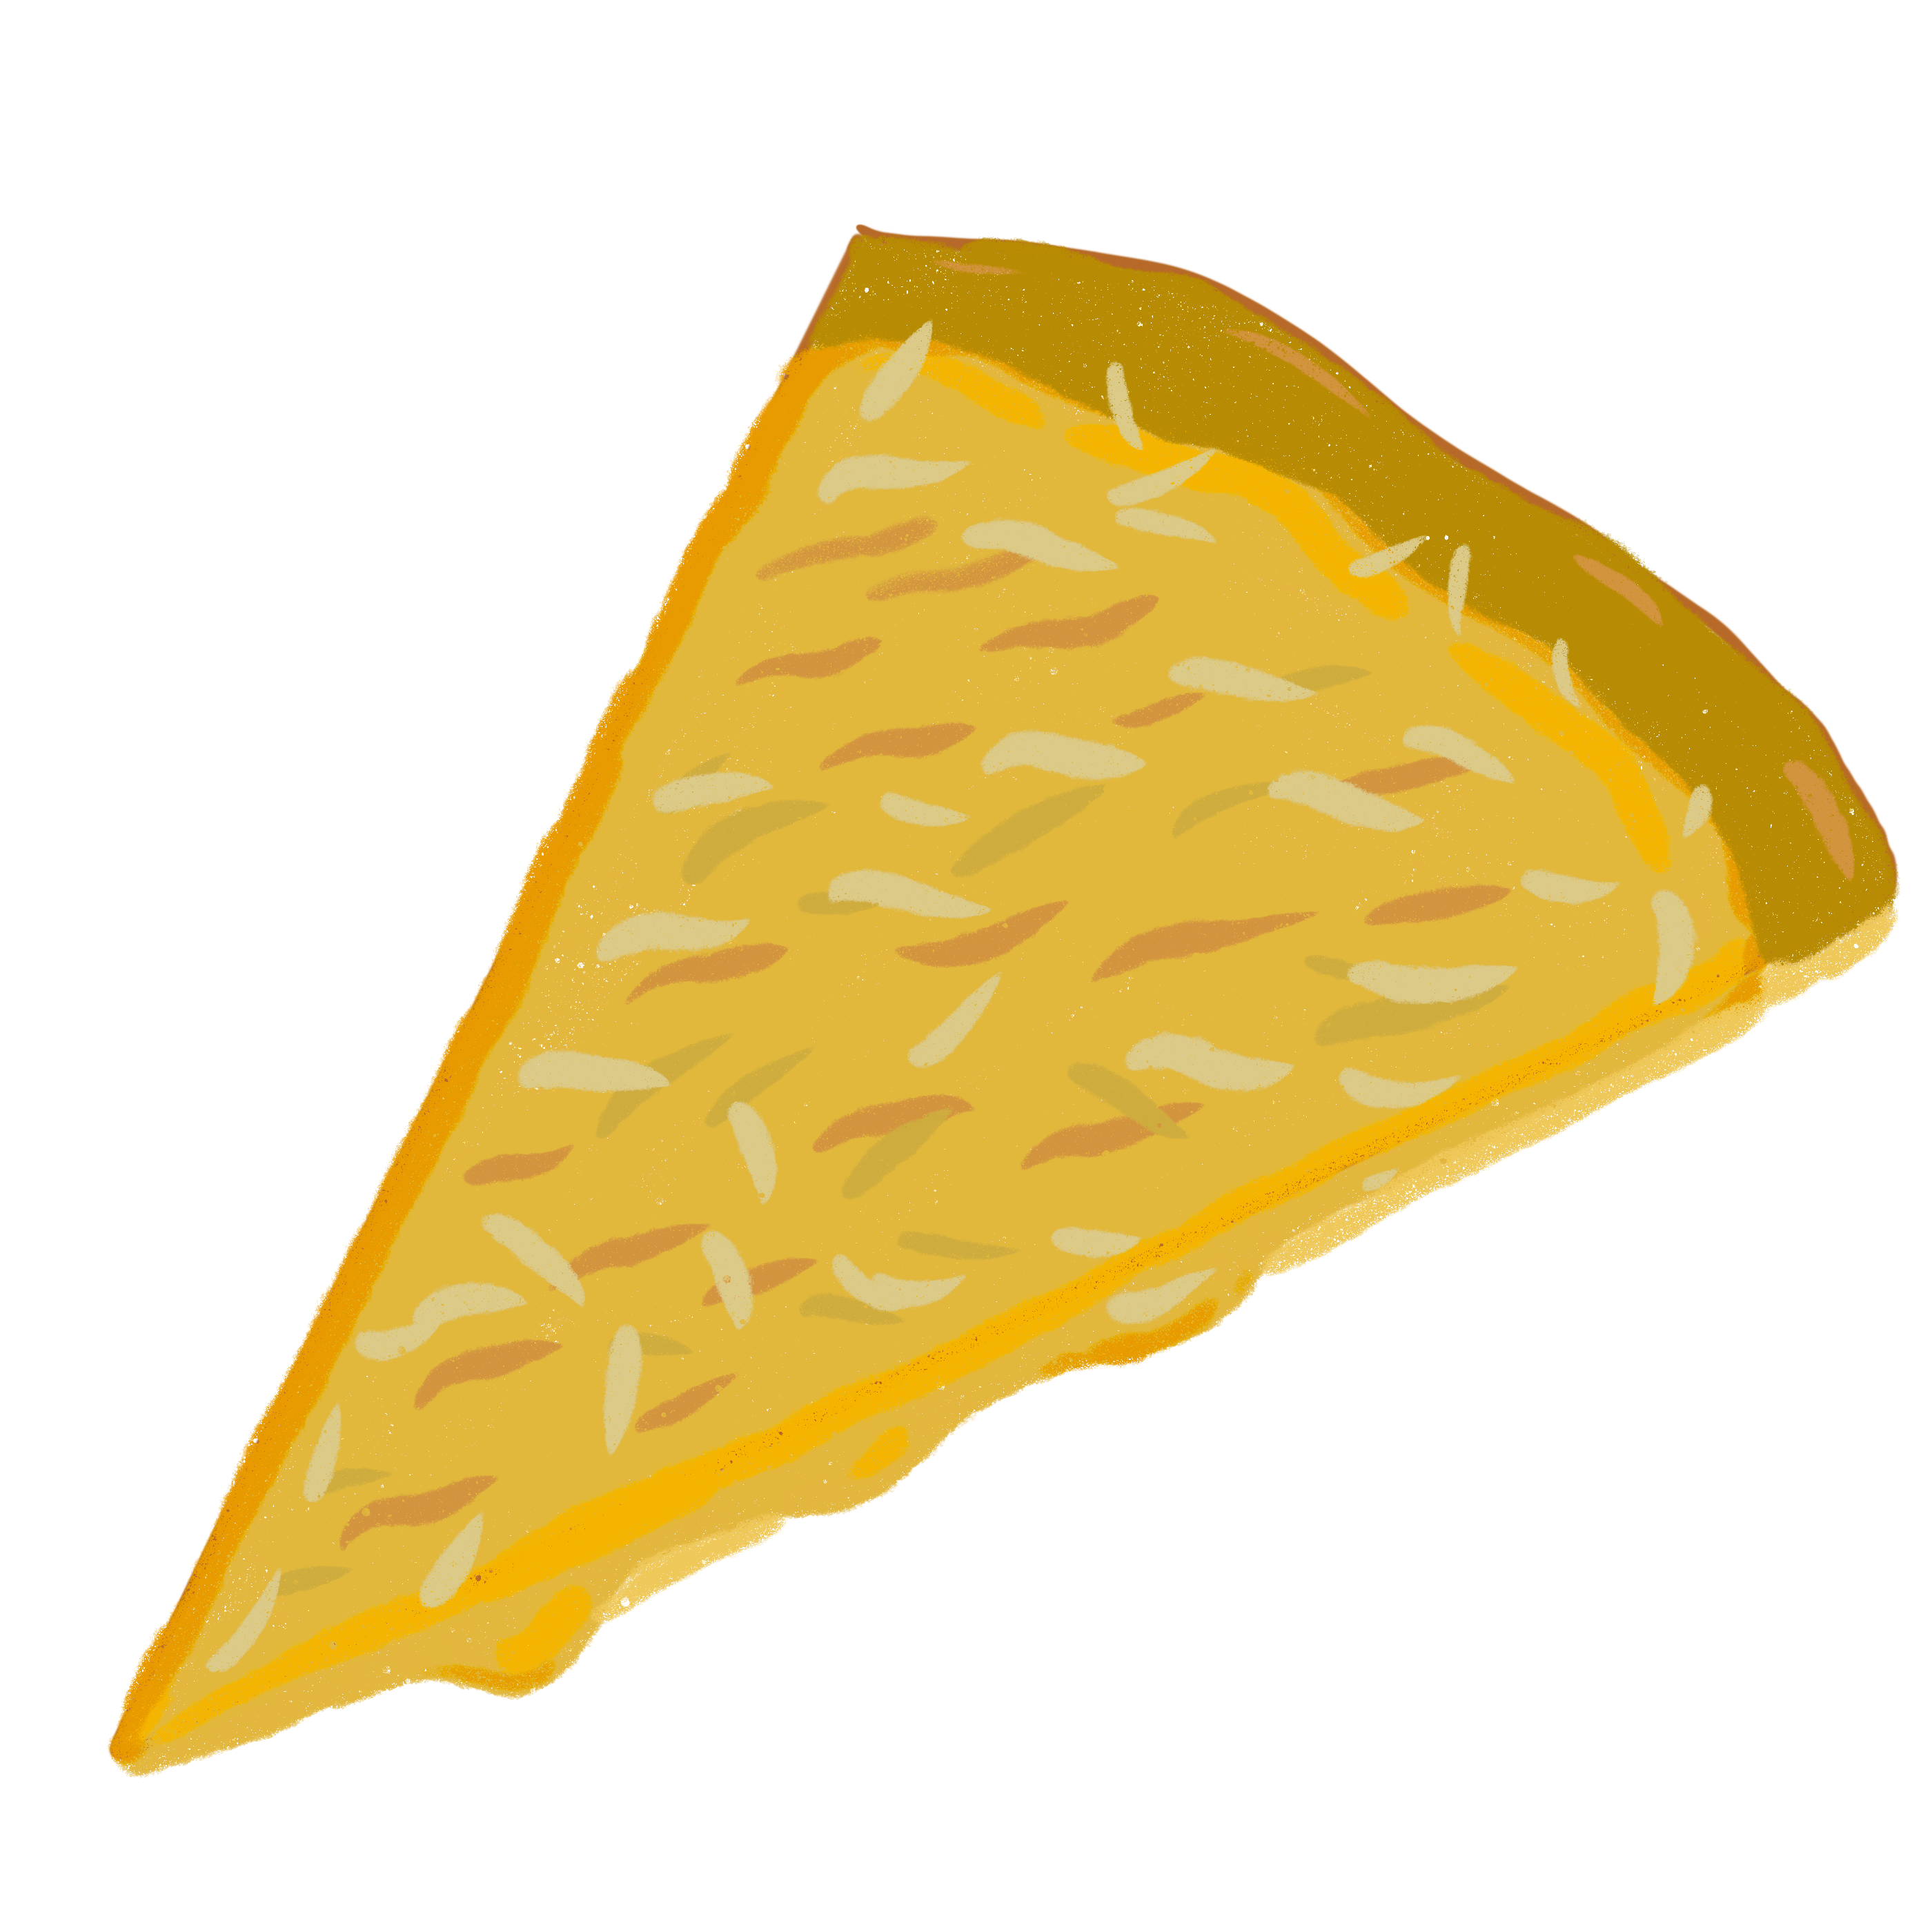 cartoon cheese pizza